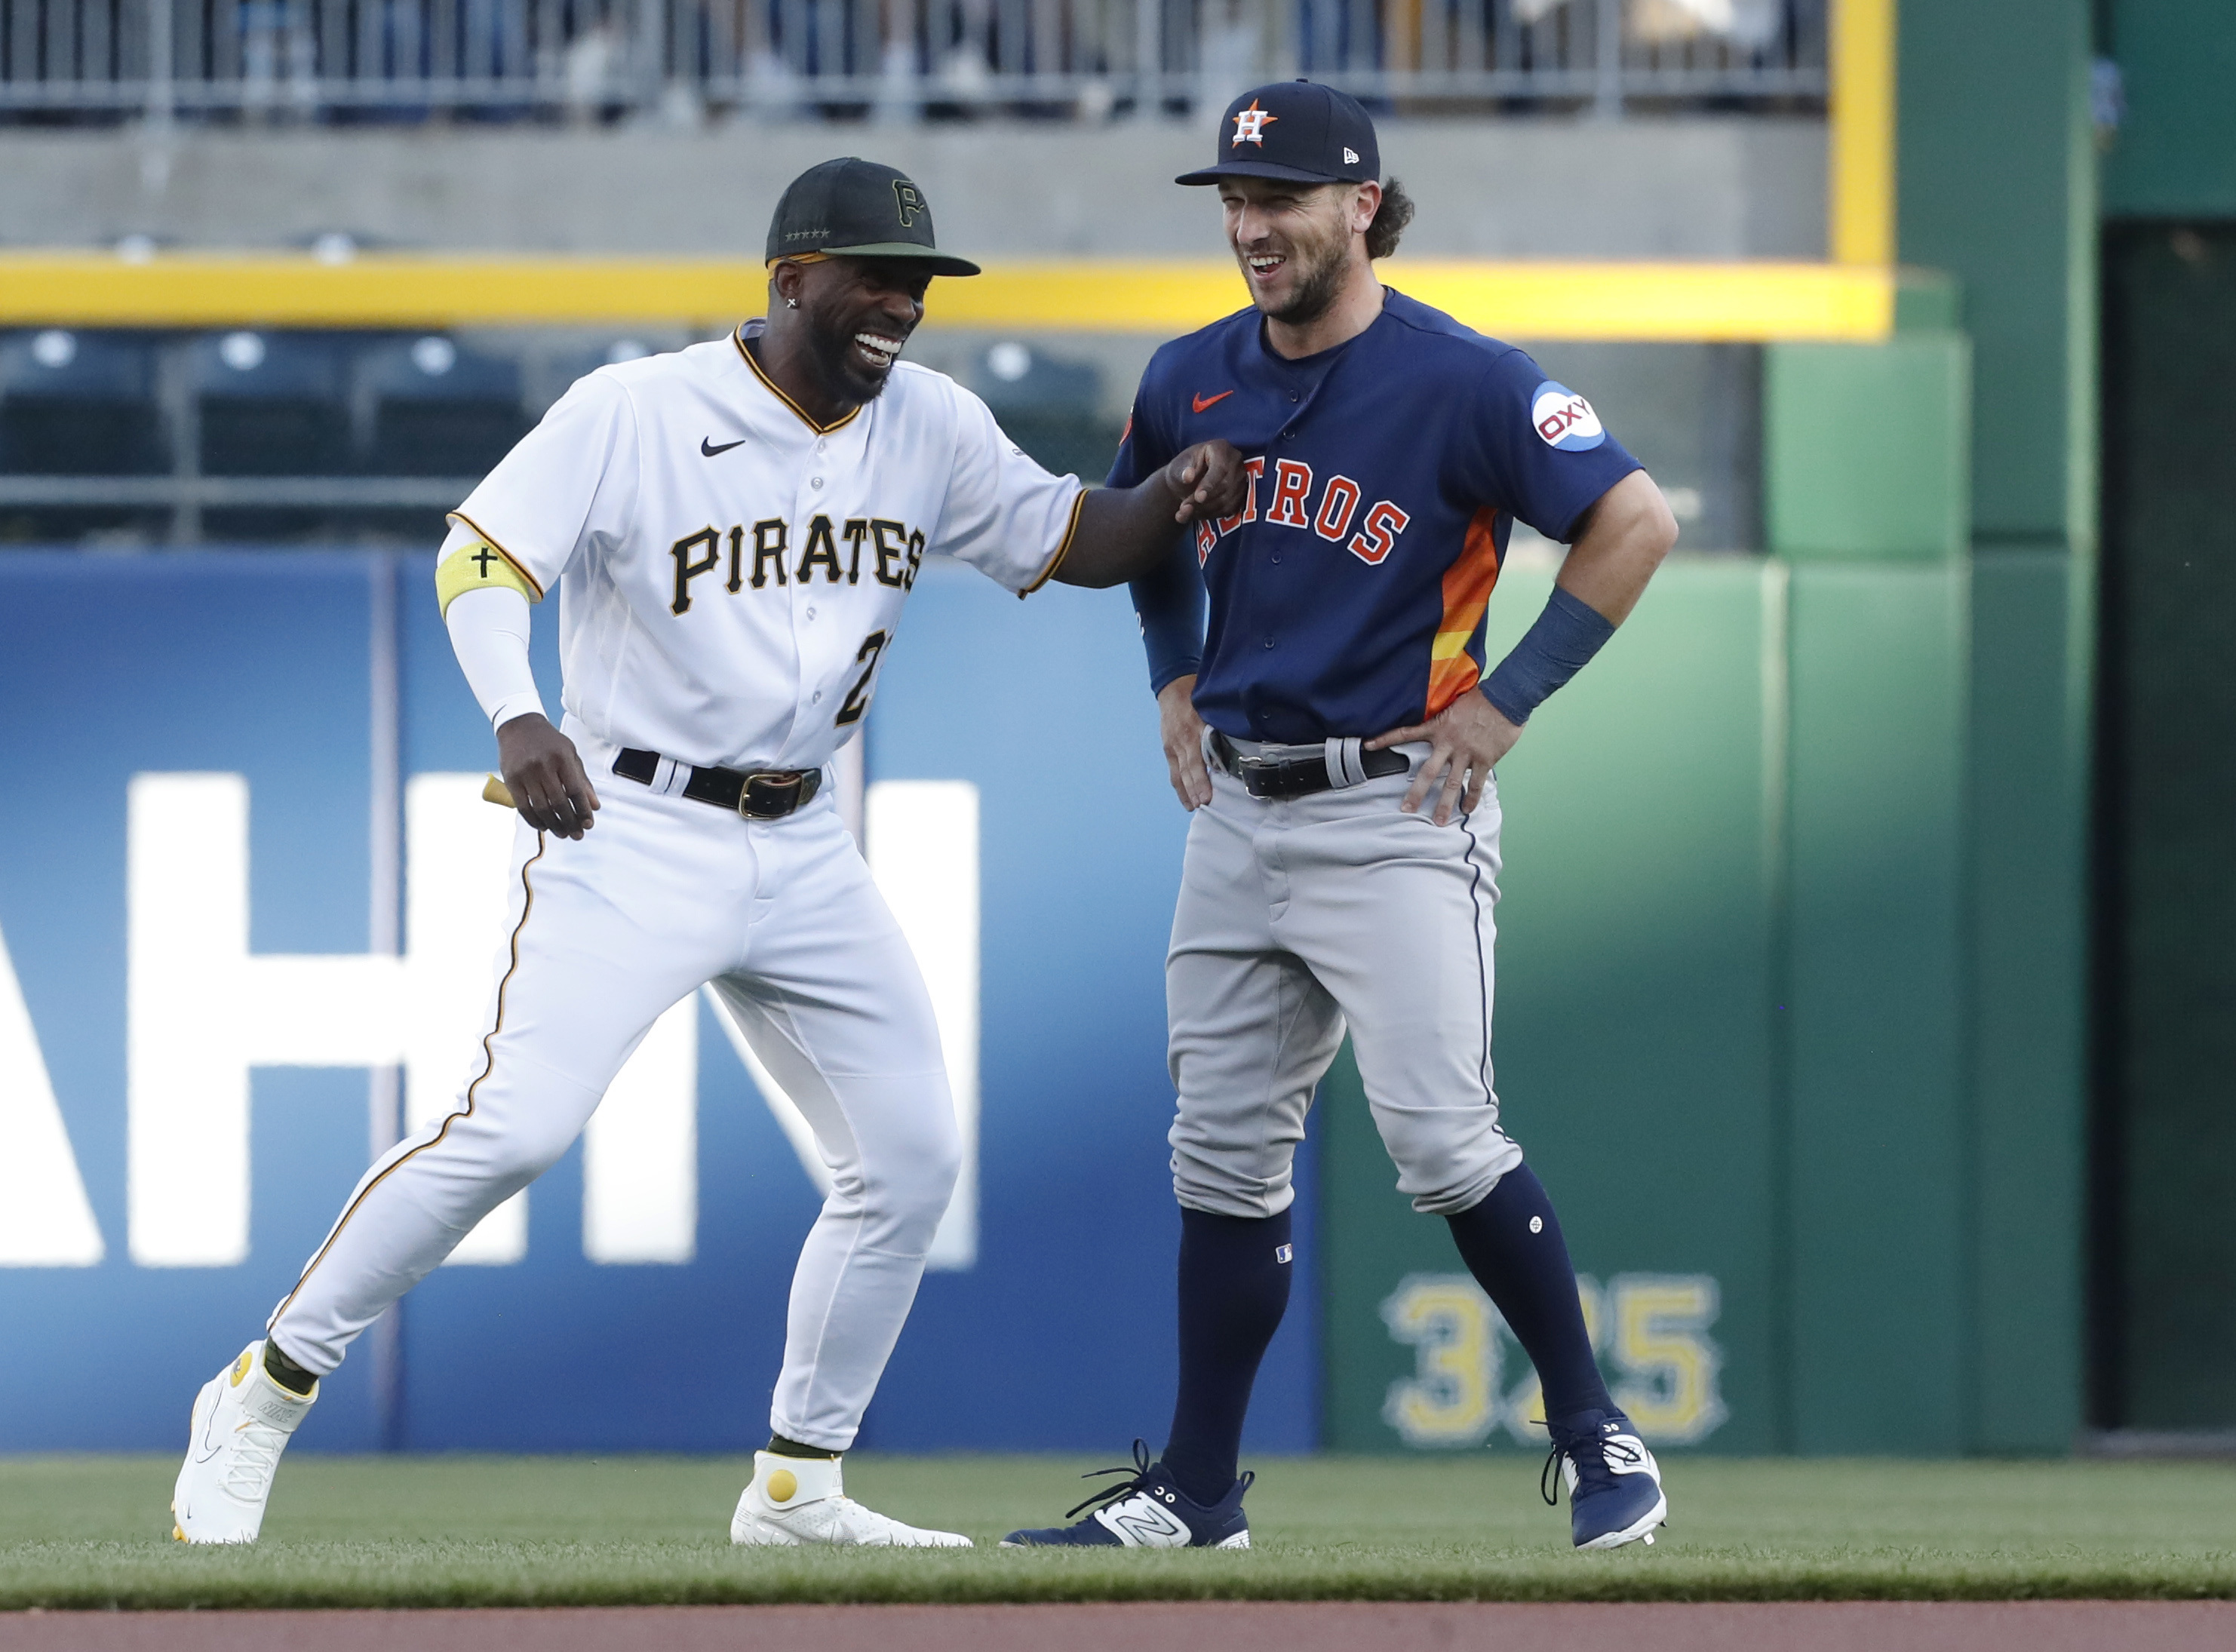 In photos: MLB: Houston Astros vs. Pittsburgh Pirates - All Photos